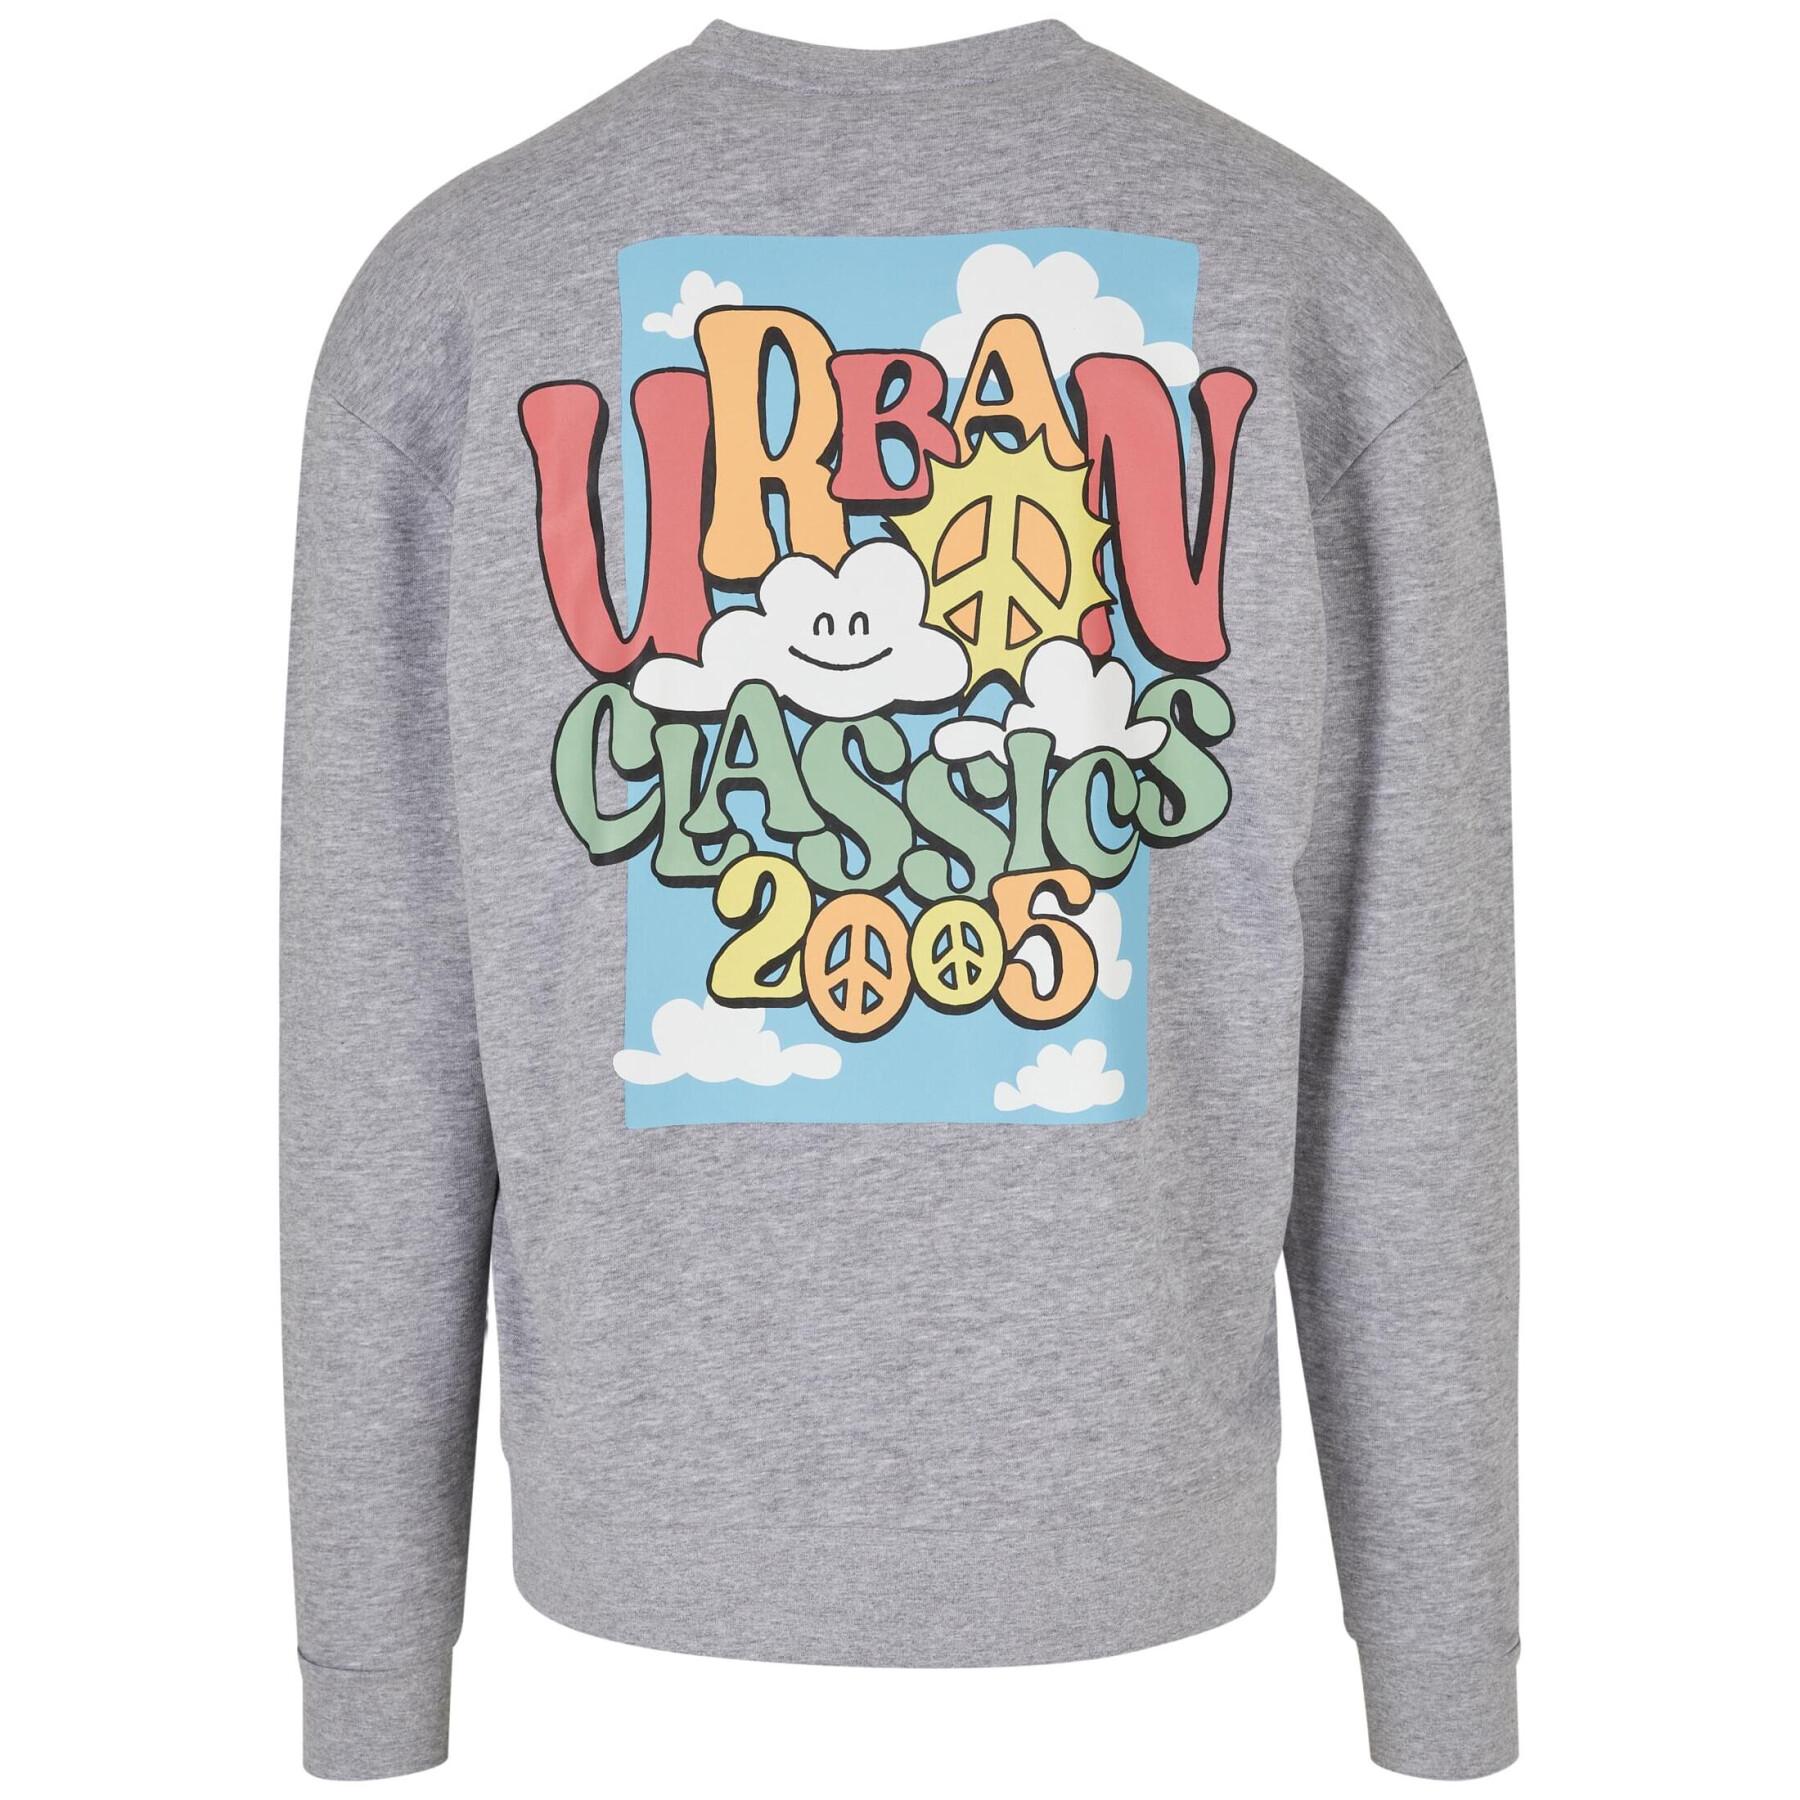 Sweatshirt col rond Urban Classics Cloudy